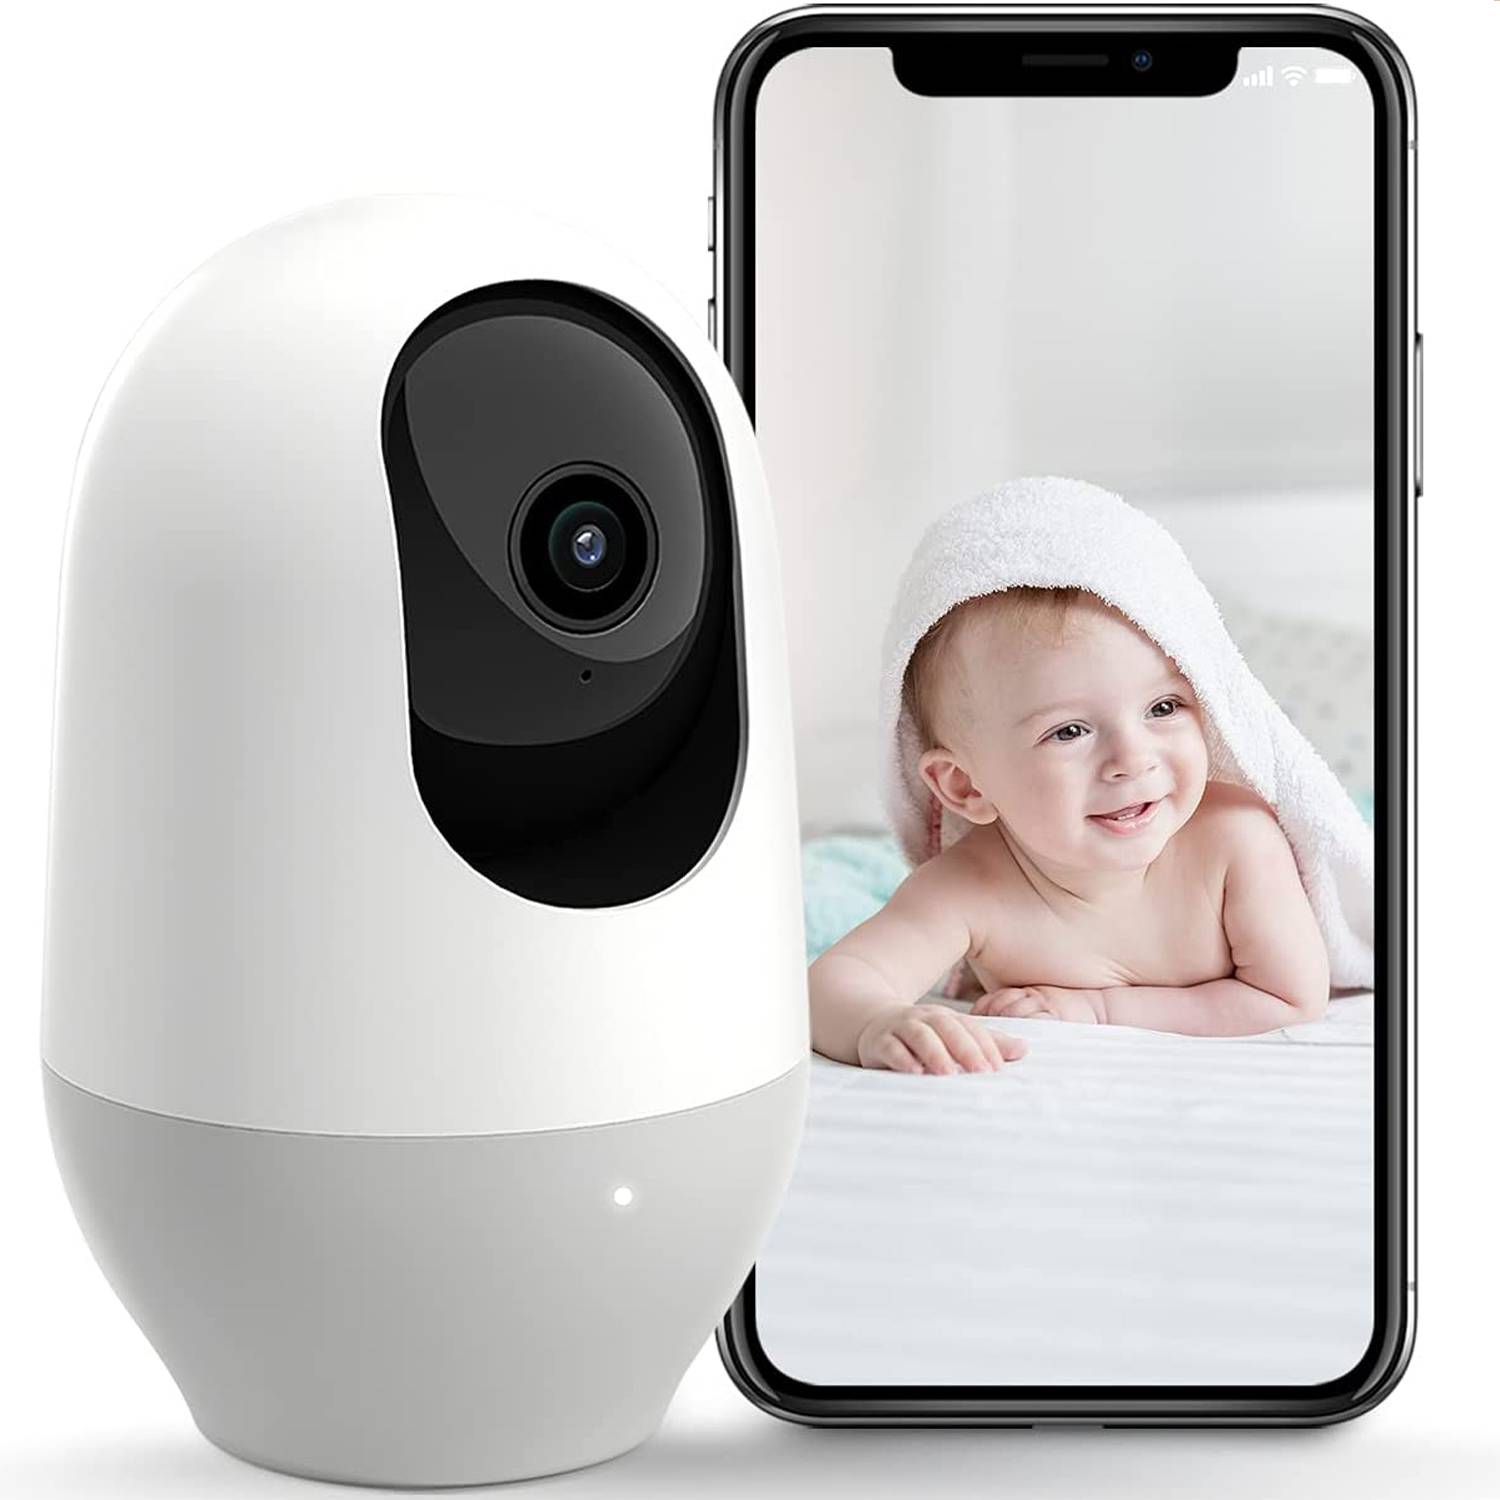 Monitor de bebé, cámara de seguridad de vigilancia Exterieur inalámbrica  WiFi cámara 120 ° gran angular 720 p mini sistema de vigilancia para bebés